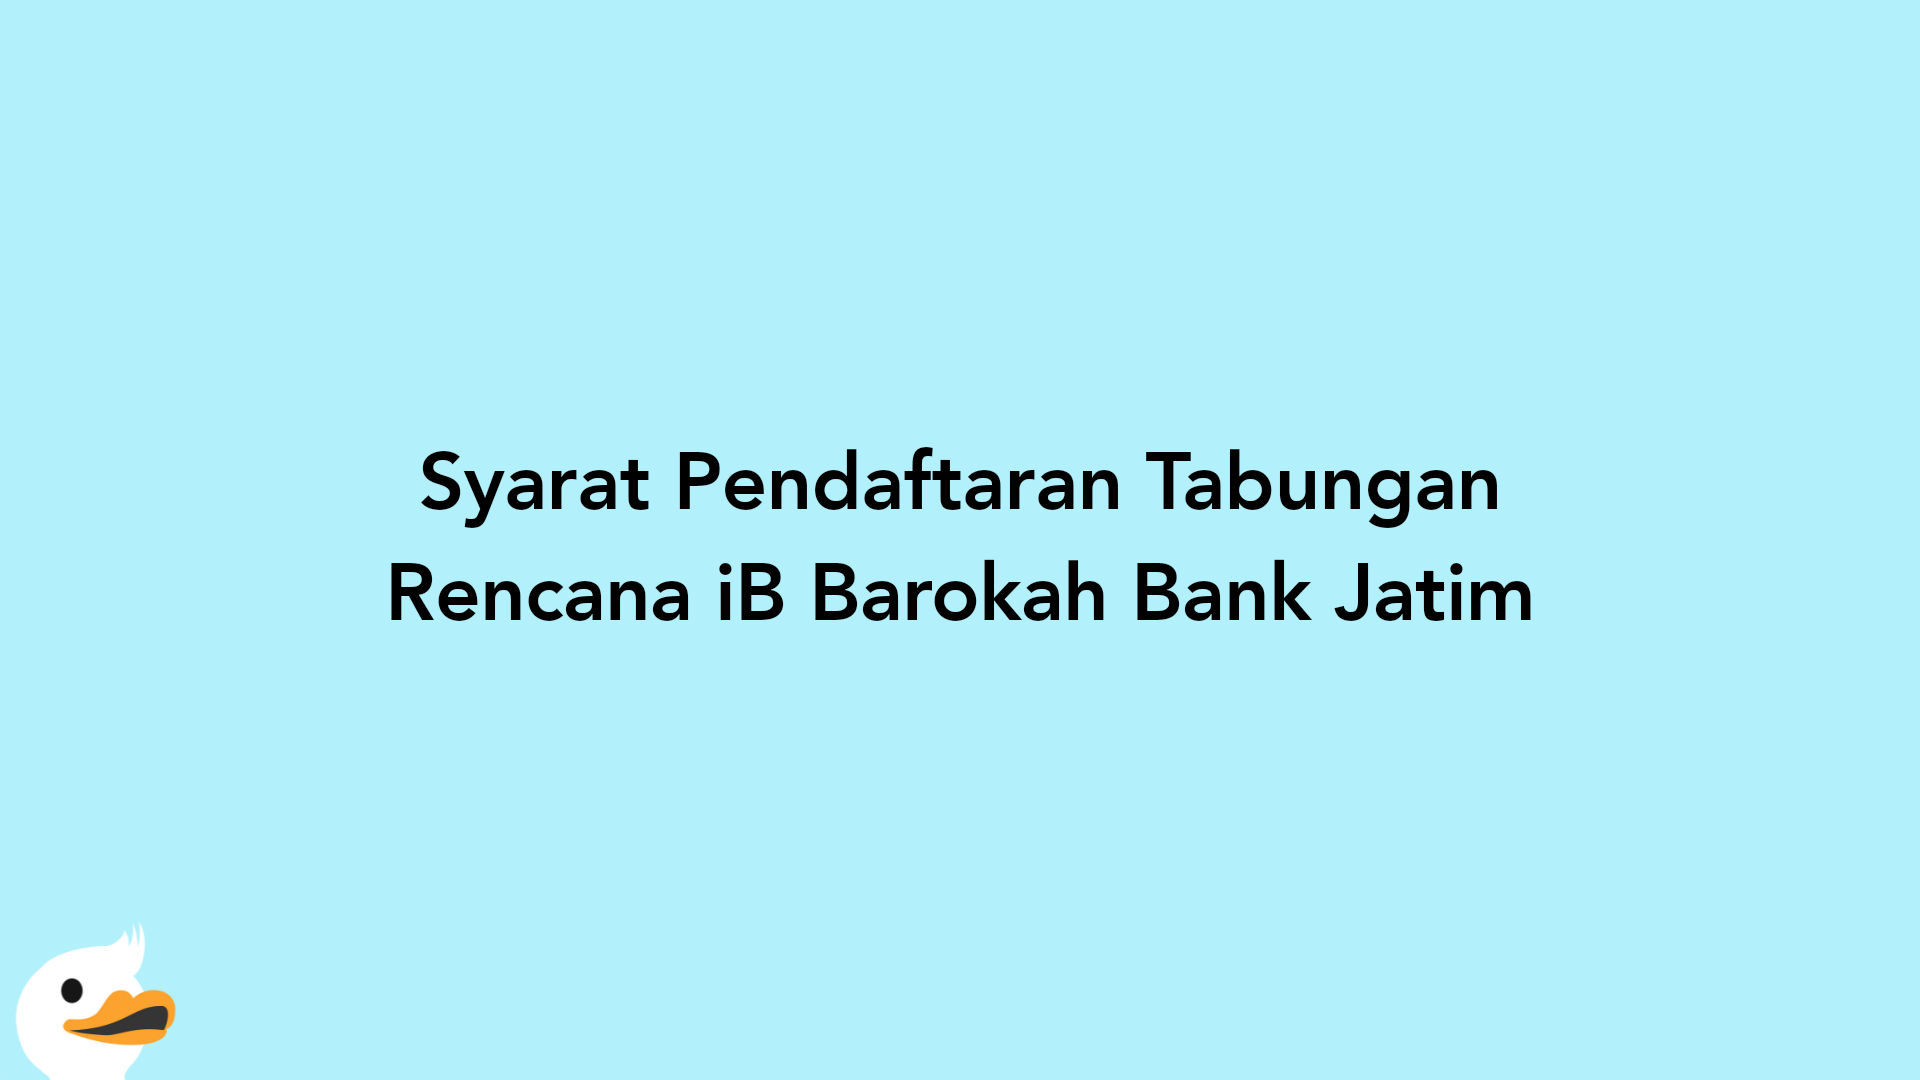 Syarat Pendaftaran Tabungan Rencana iB Barokah Bank Jatim